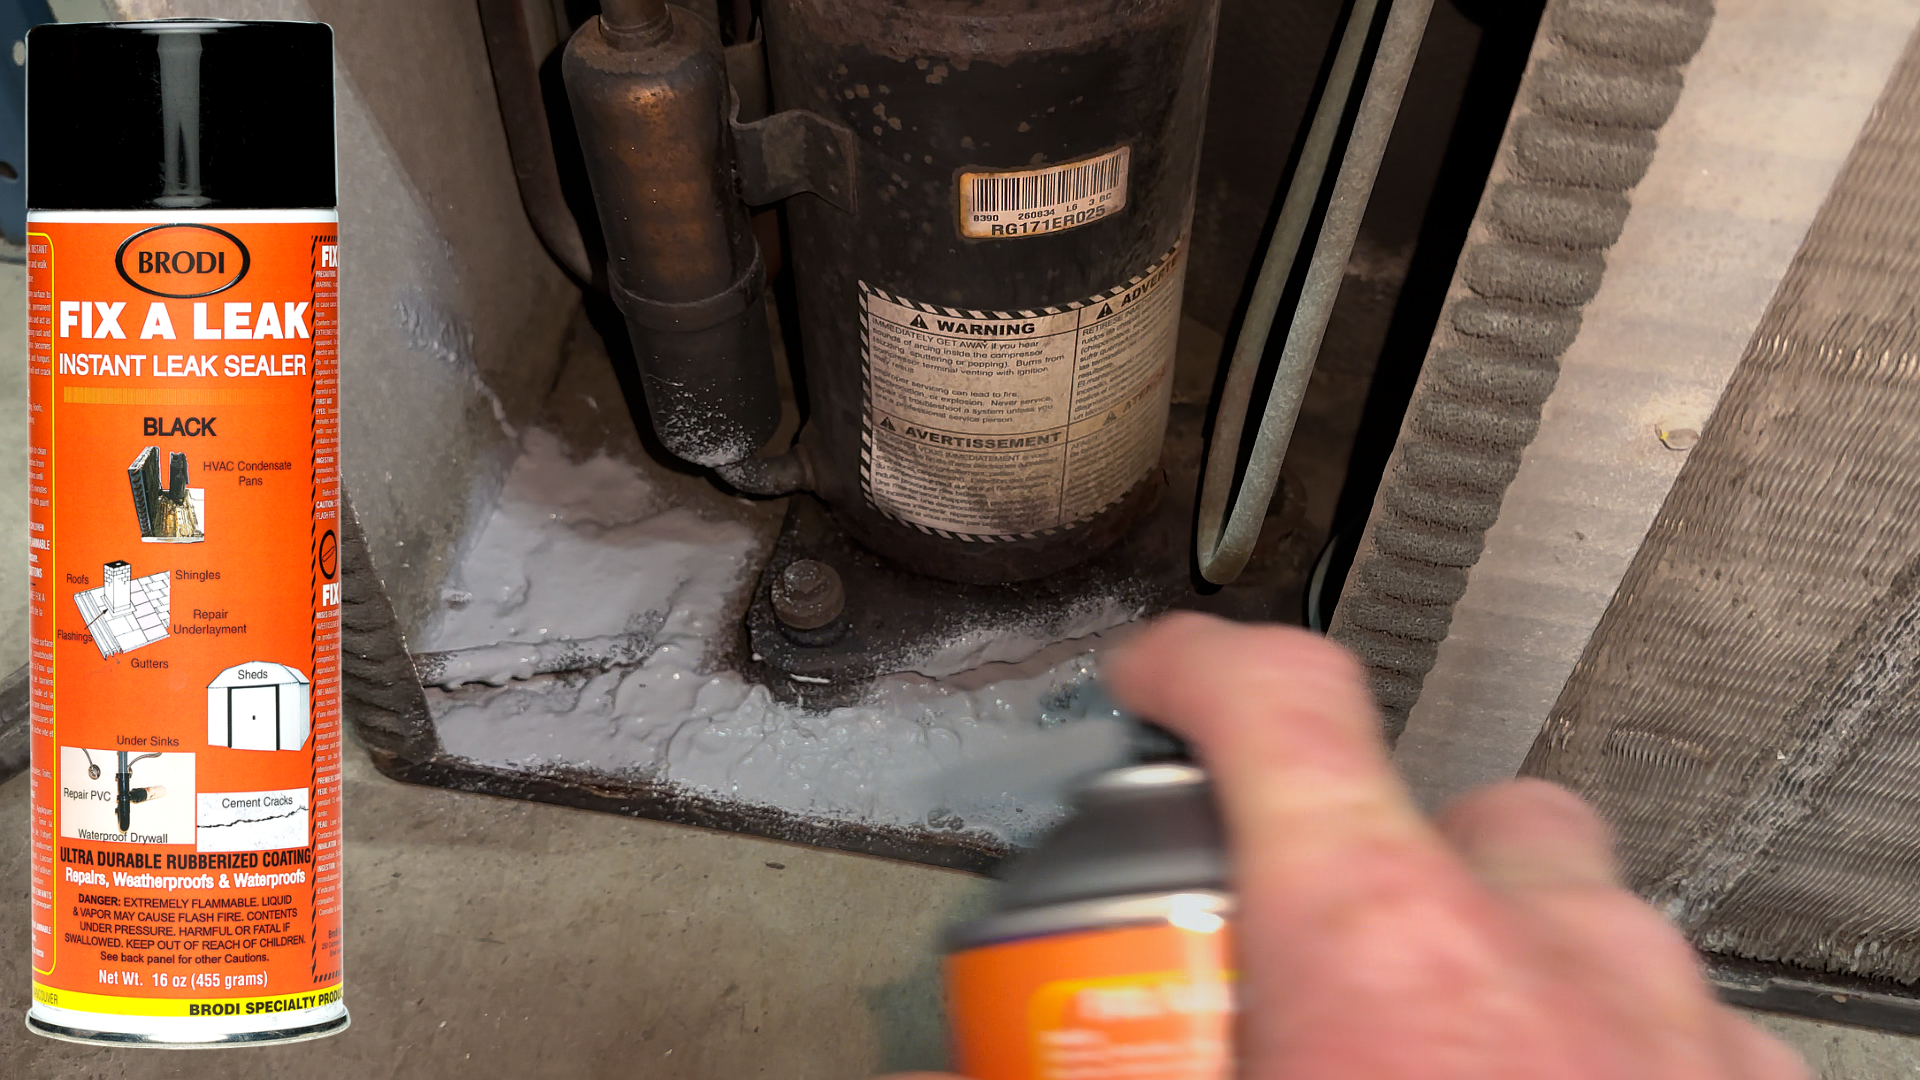 Fix leaks spray on rubber coating waterproofing condensate pans